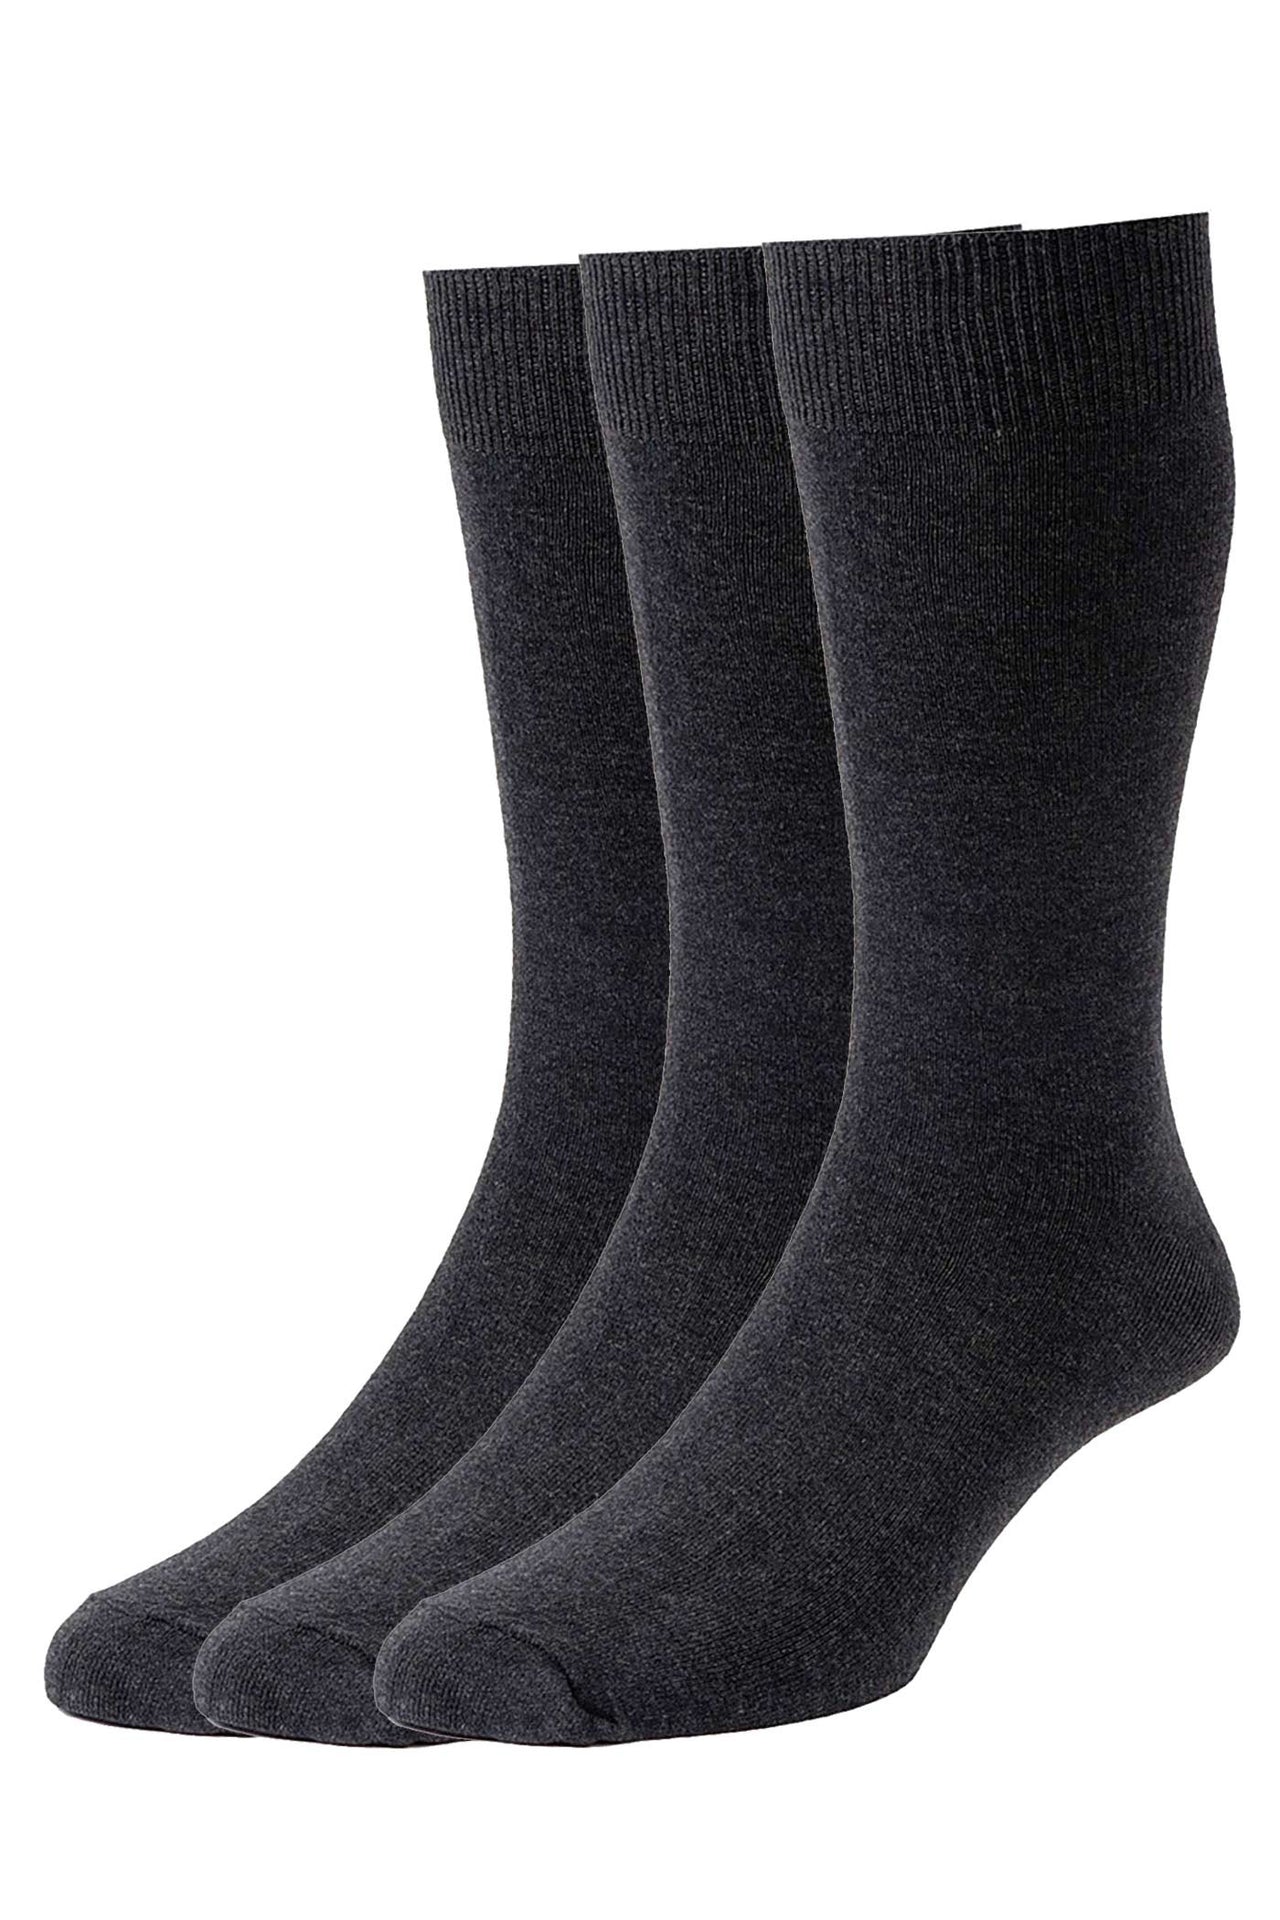 HJ Hall Plain Knit Charcoal Cotton Socks 3 Pack